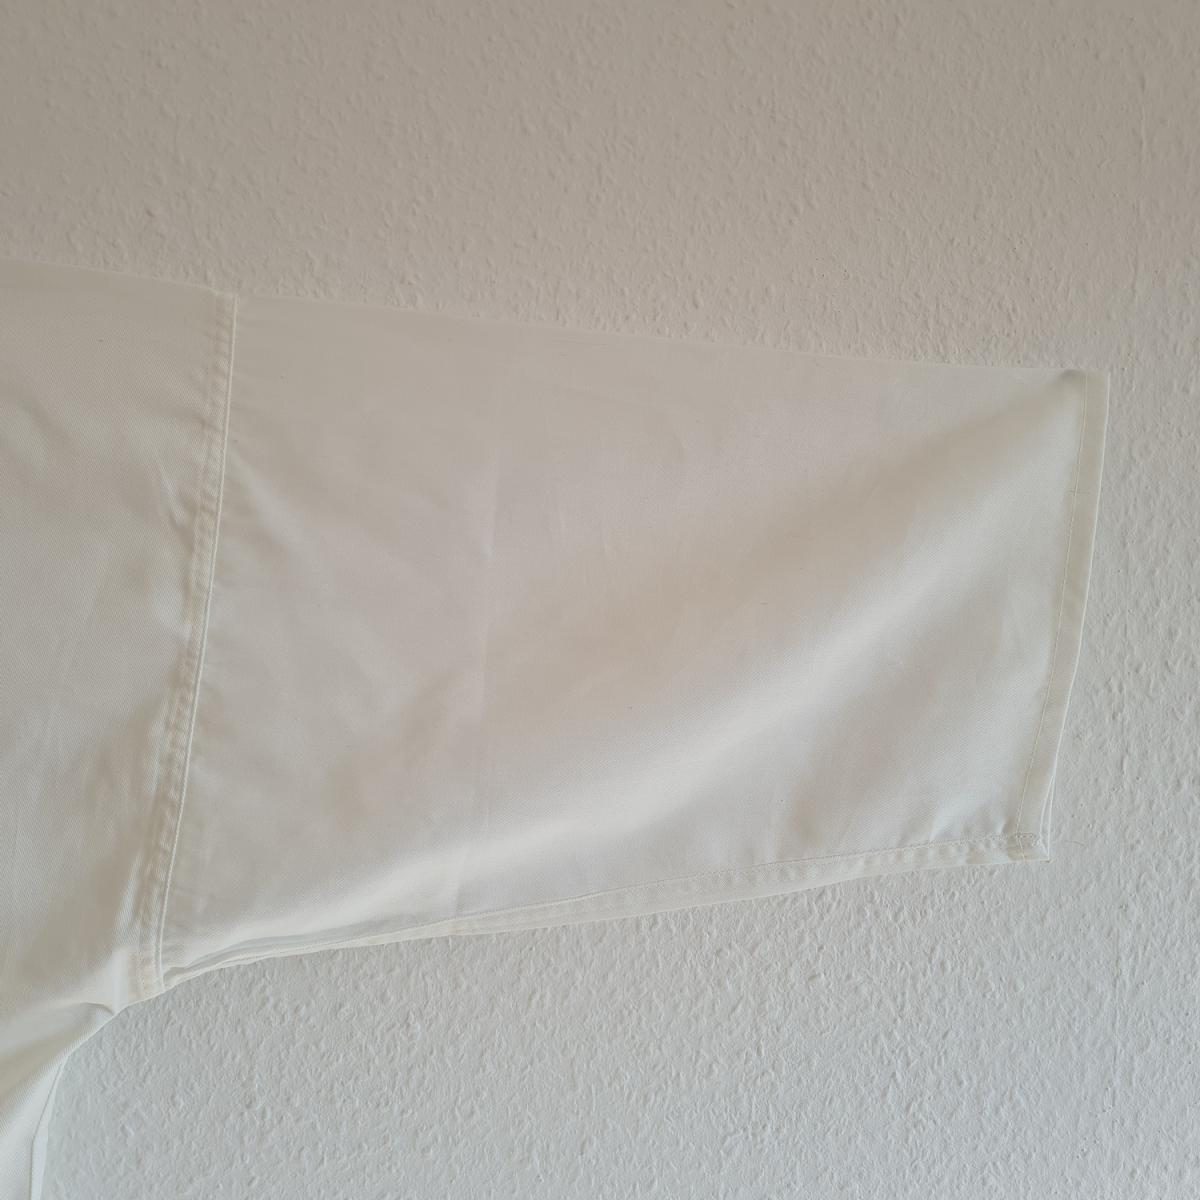 Gi made of cotton - fabric color white - size 180 cm ➤ www.bokken-shop.de. Gi suitable for Iaido, Aikdo, Kendo, Jodo. Your Budo dealer!